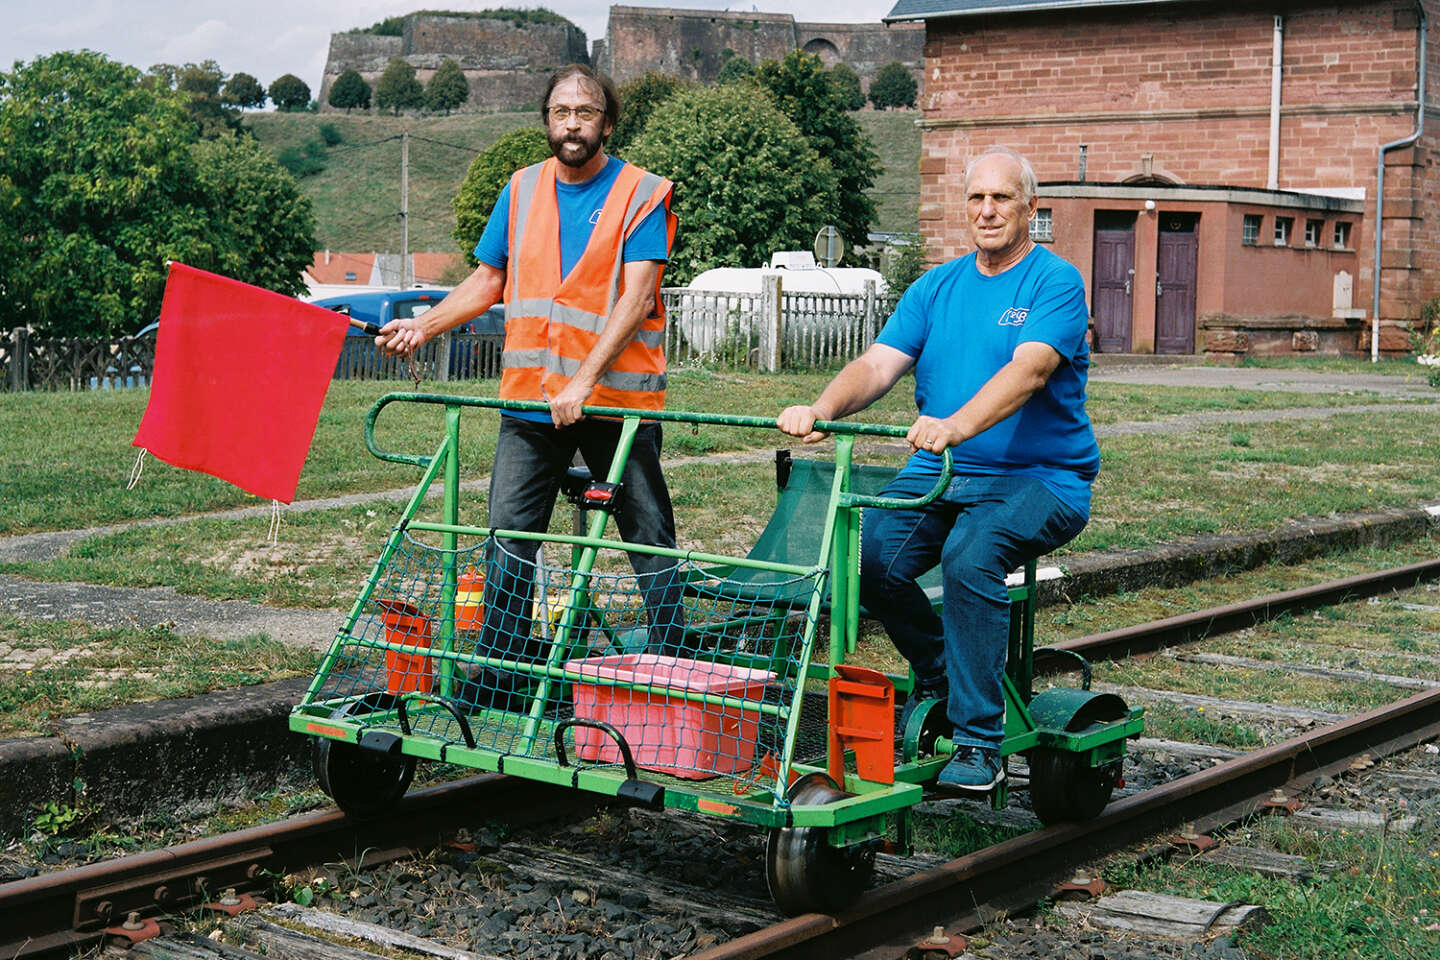 In Moselle, the rewarded efforts of rail volunteers